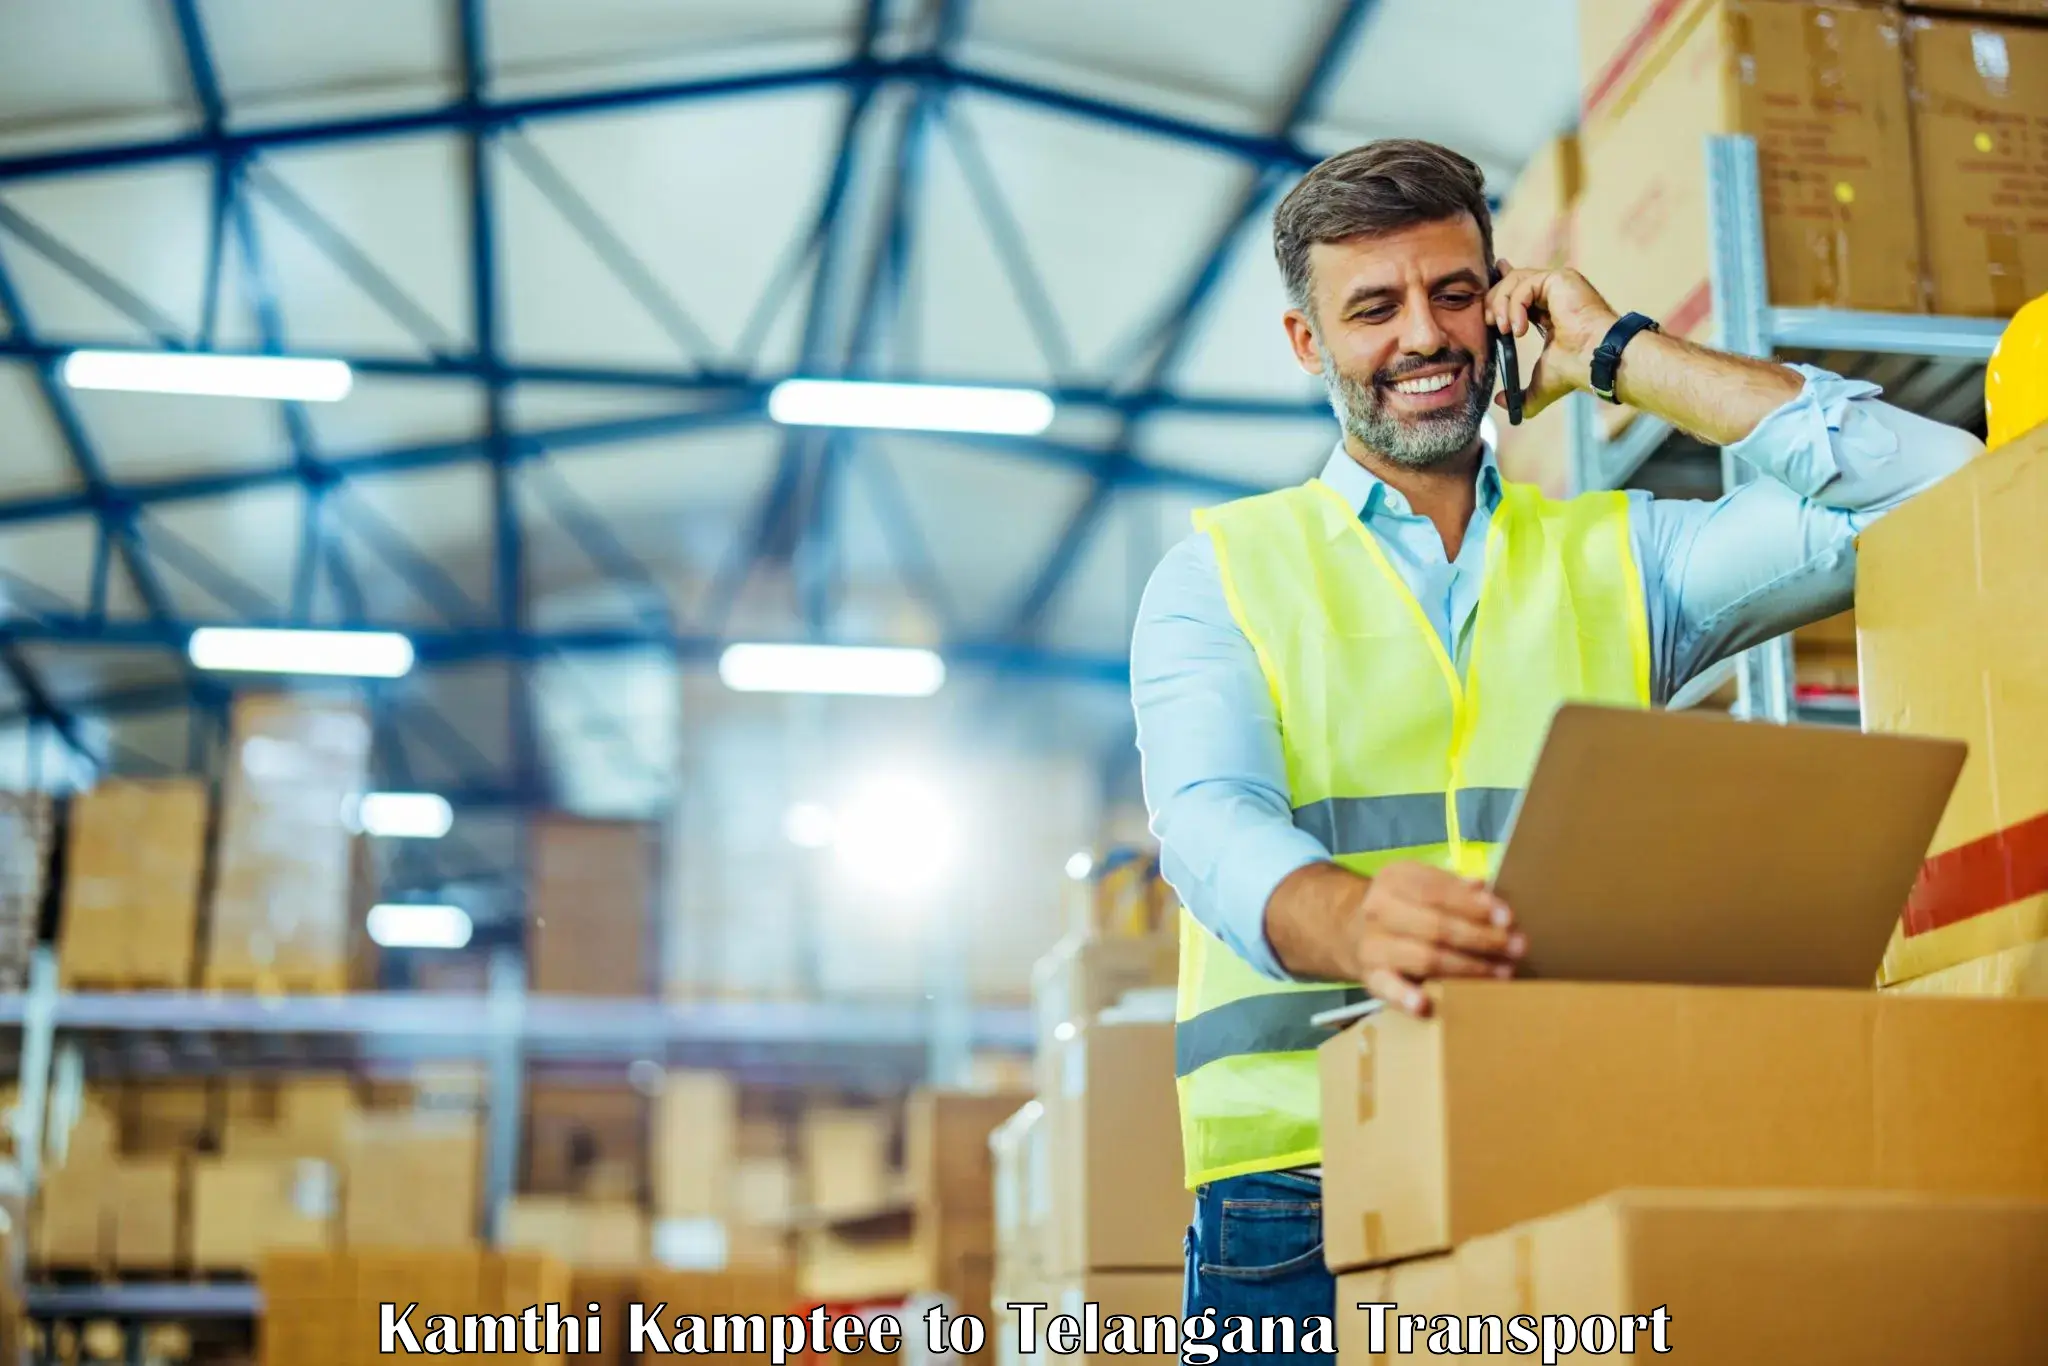 Shipping partner Kamthi Kamptee to Manopad